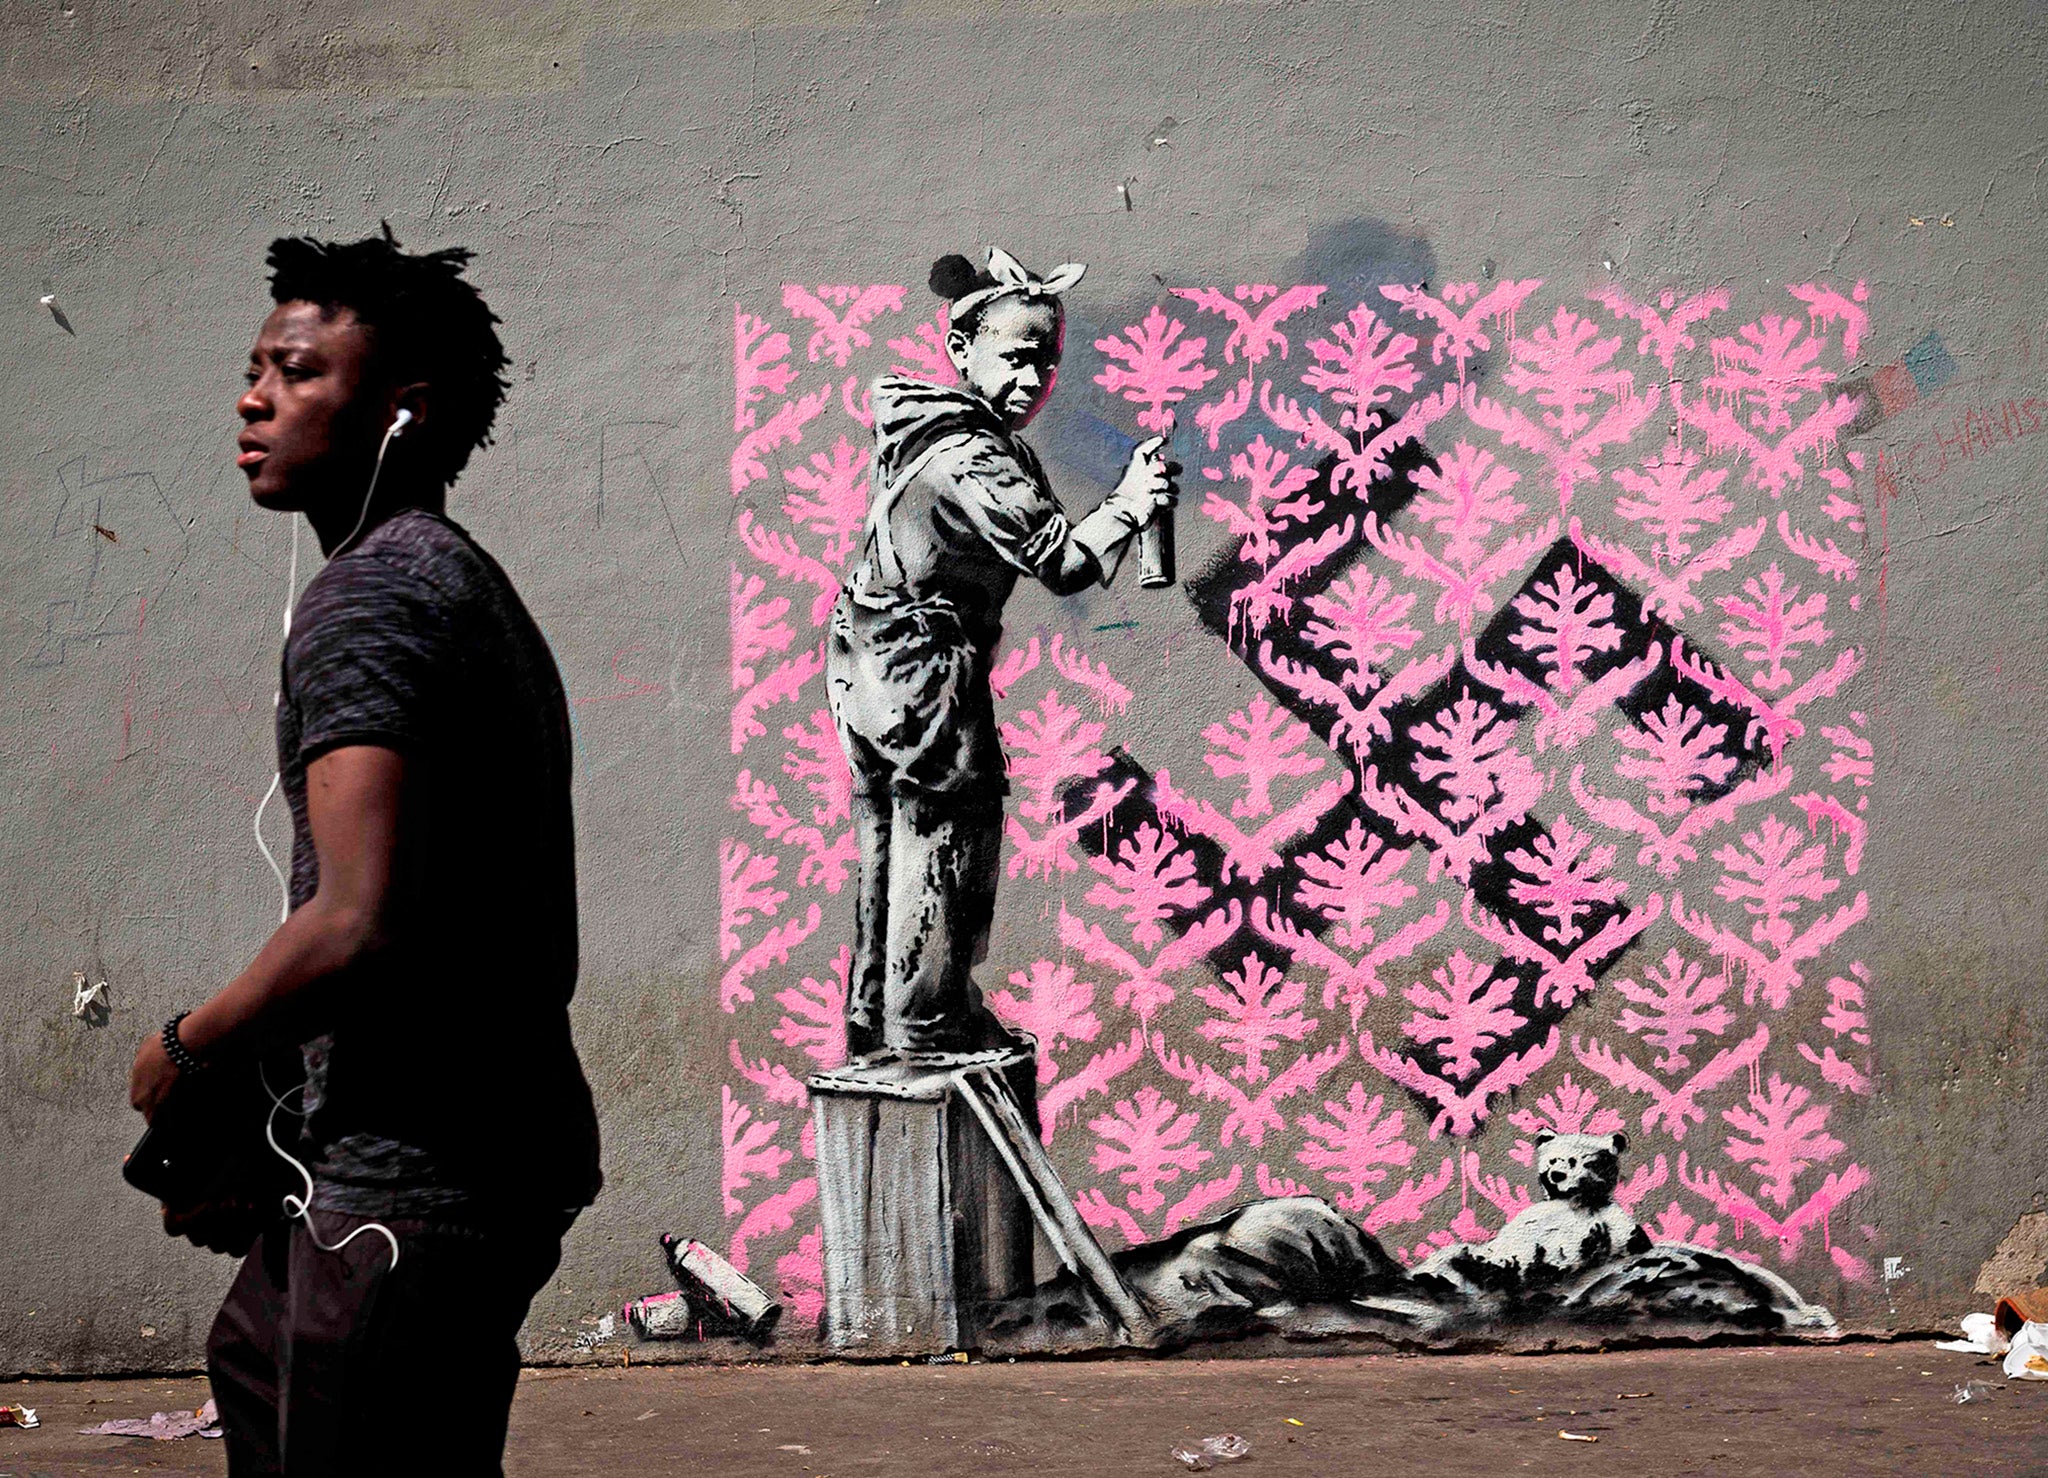 A man walks past a recent artwork by street artist Banksy in Paris